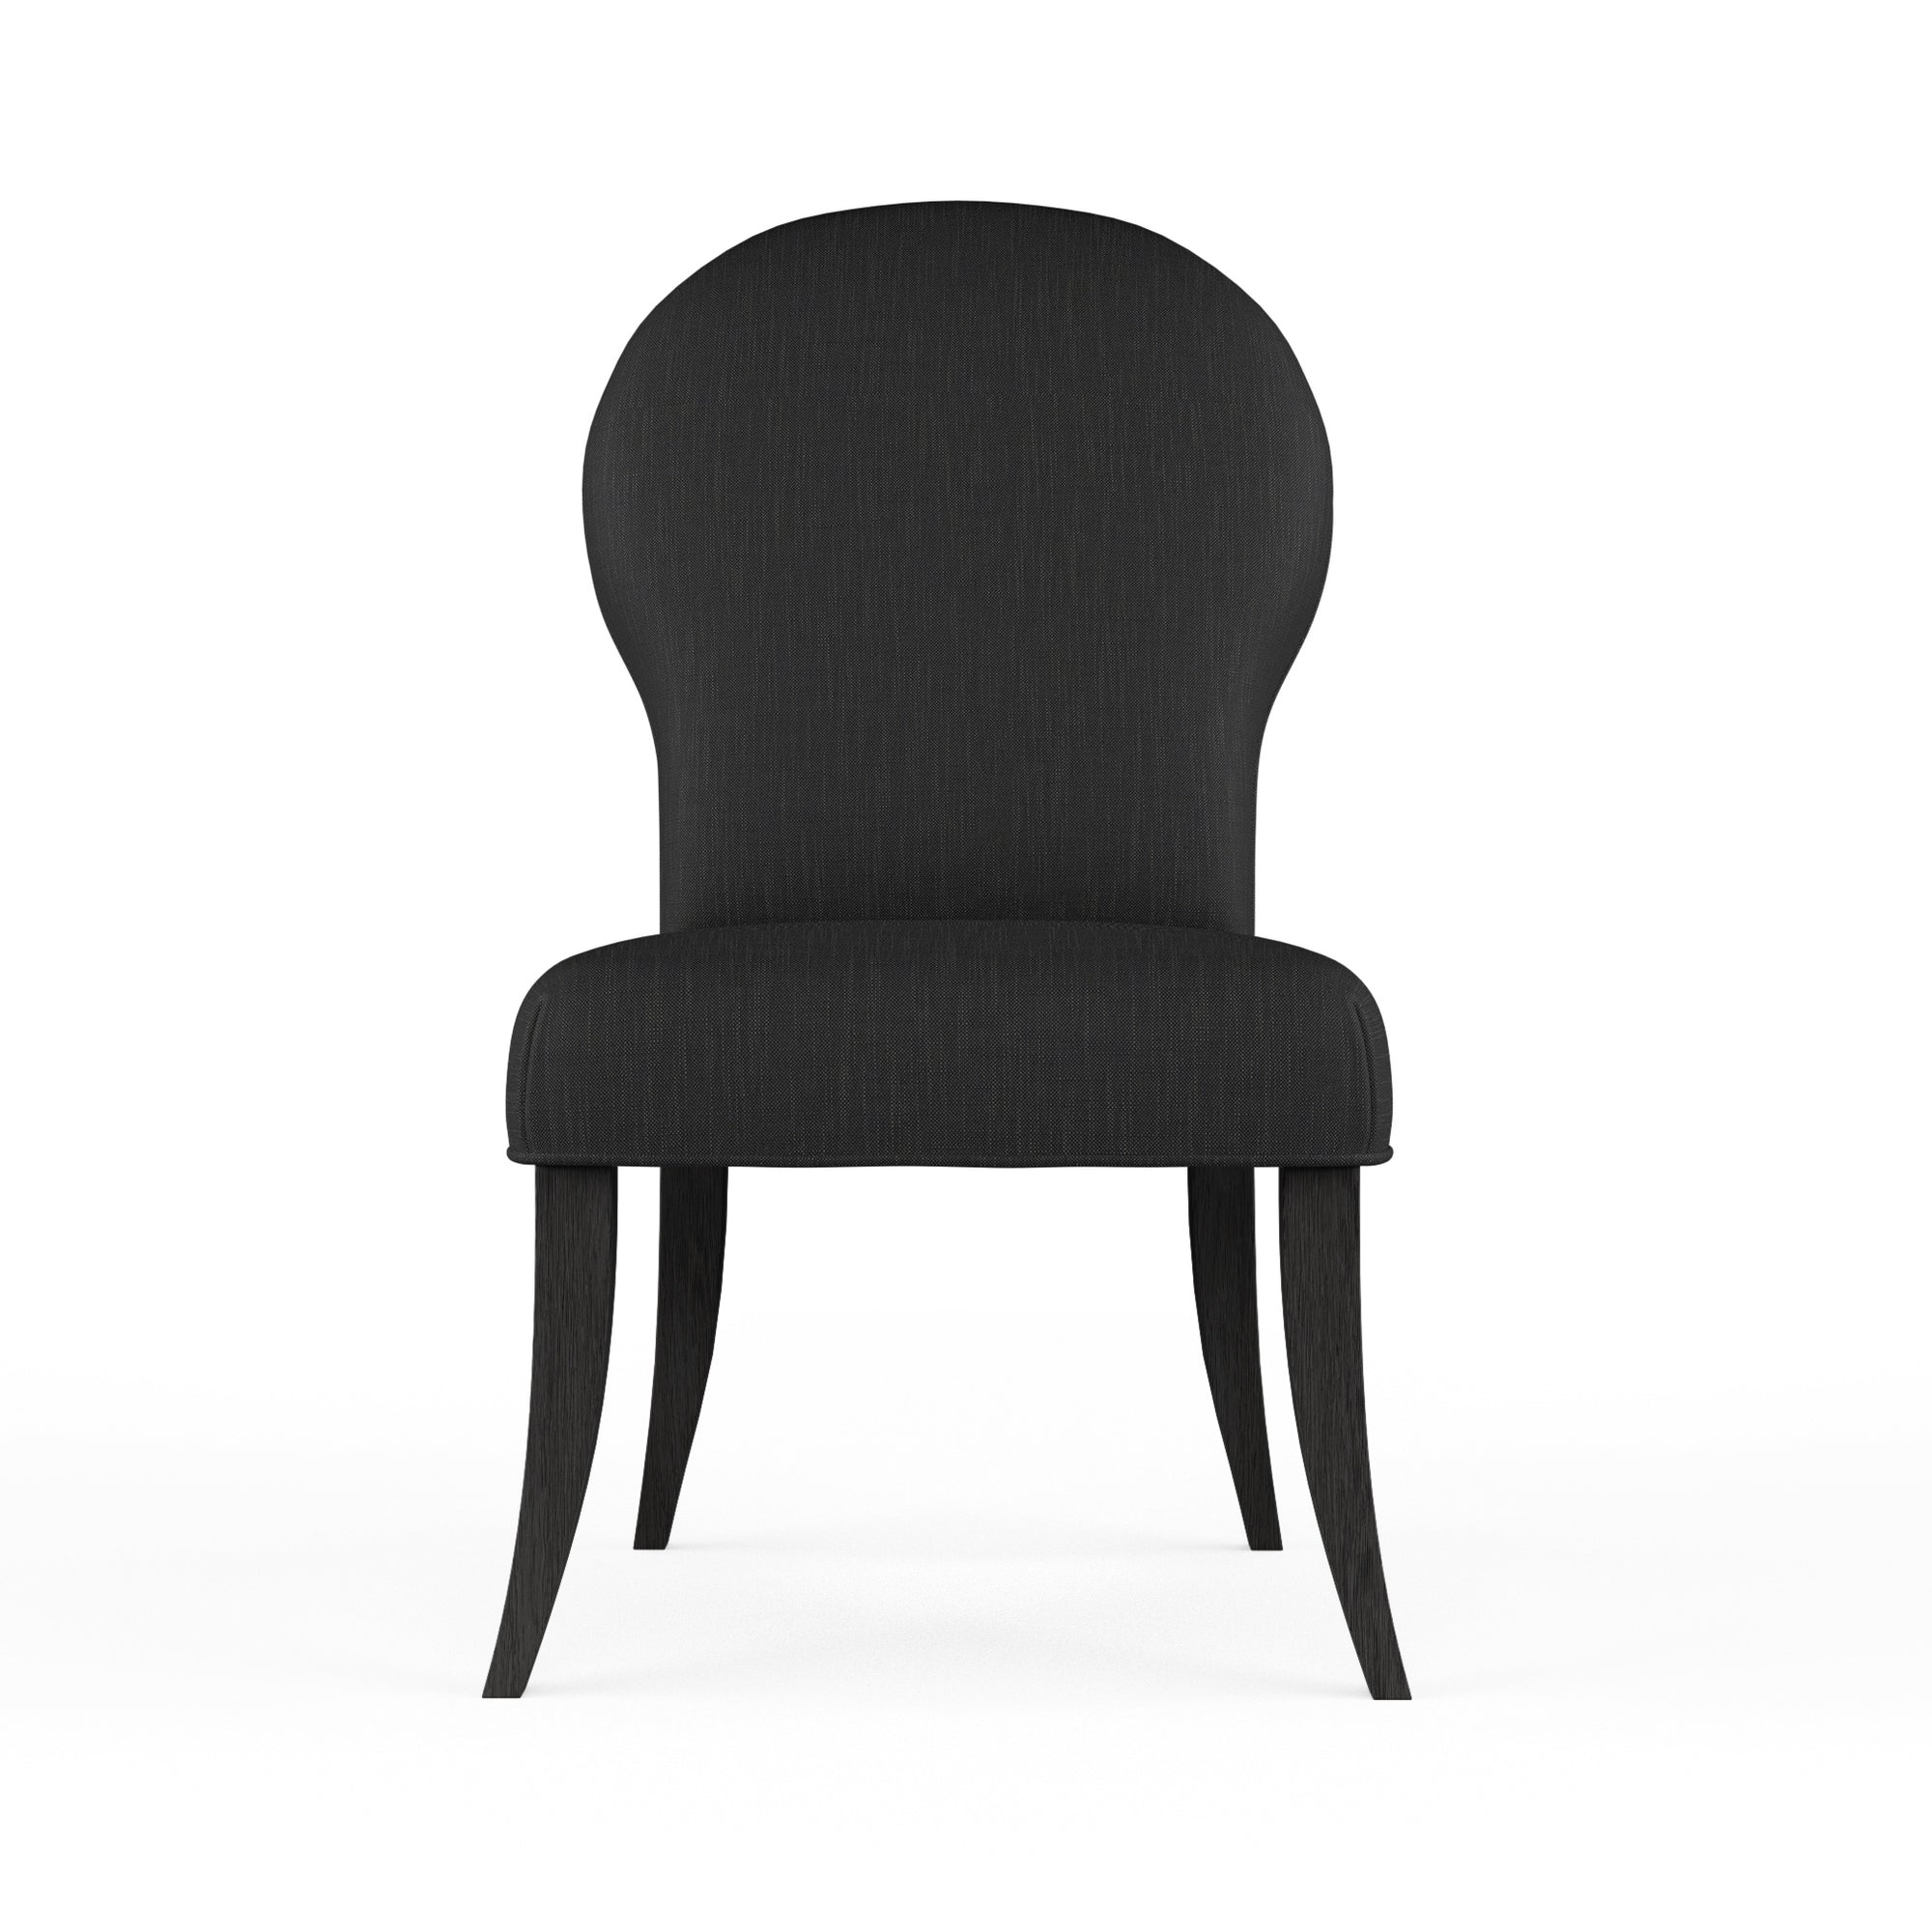 Caitlyn Dining Chair - Black Jack Box Weave Linen